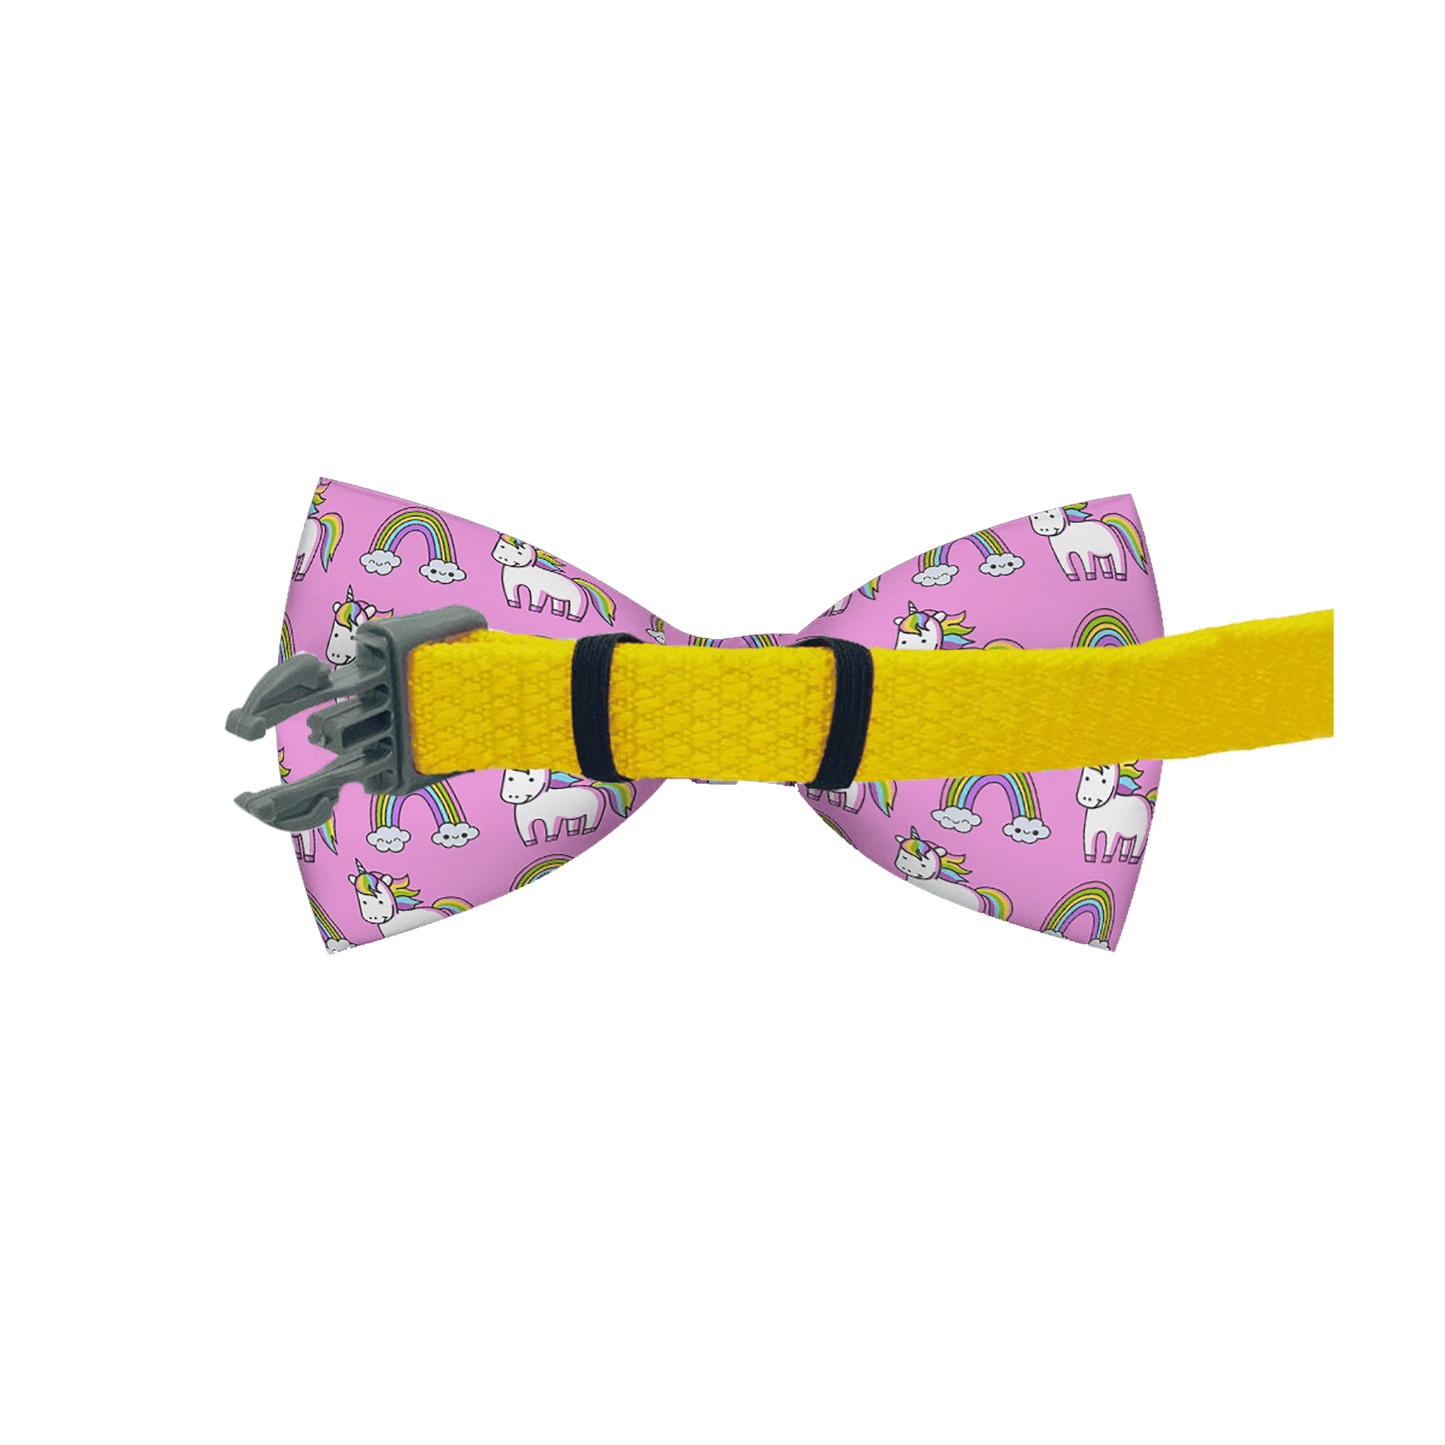 Unicorn Rainbow Dog Bow Tie - Premium Leashes, Collars & Petwear from Plum Semele - Just $7.46! Shop now at PETGS